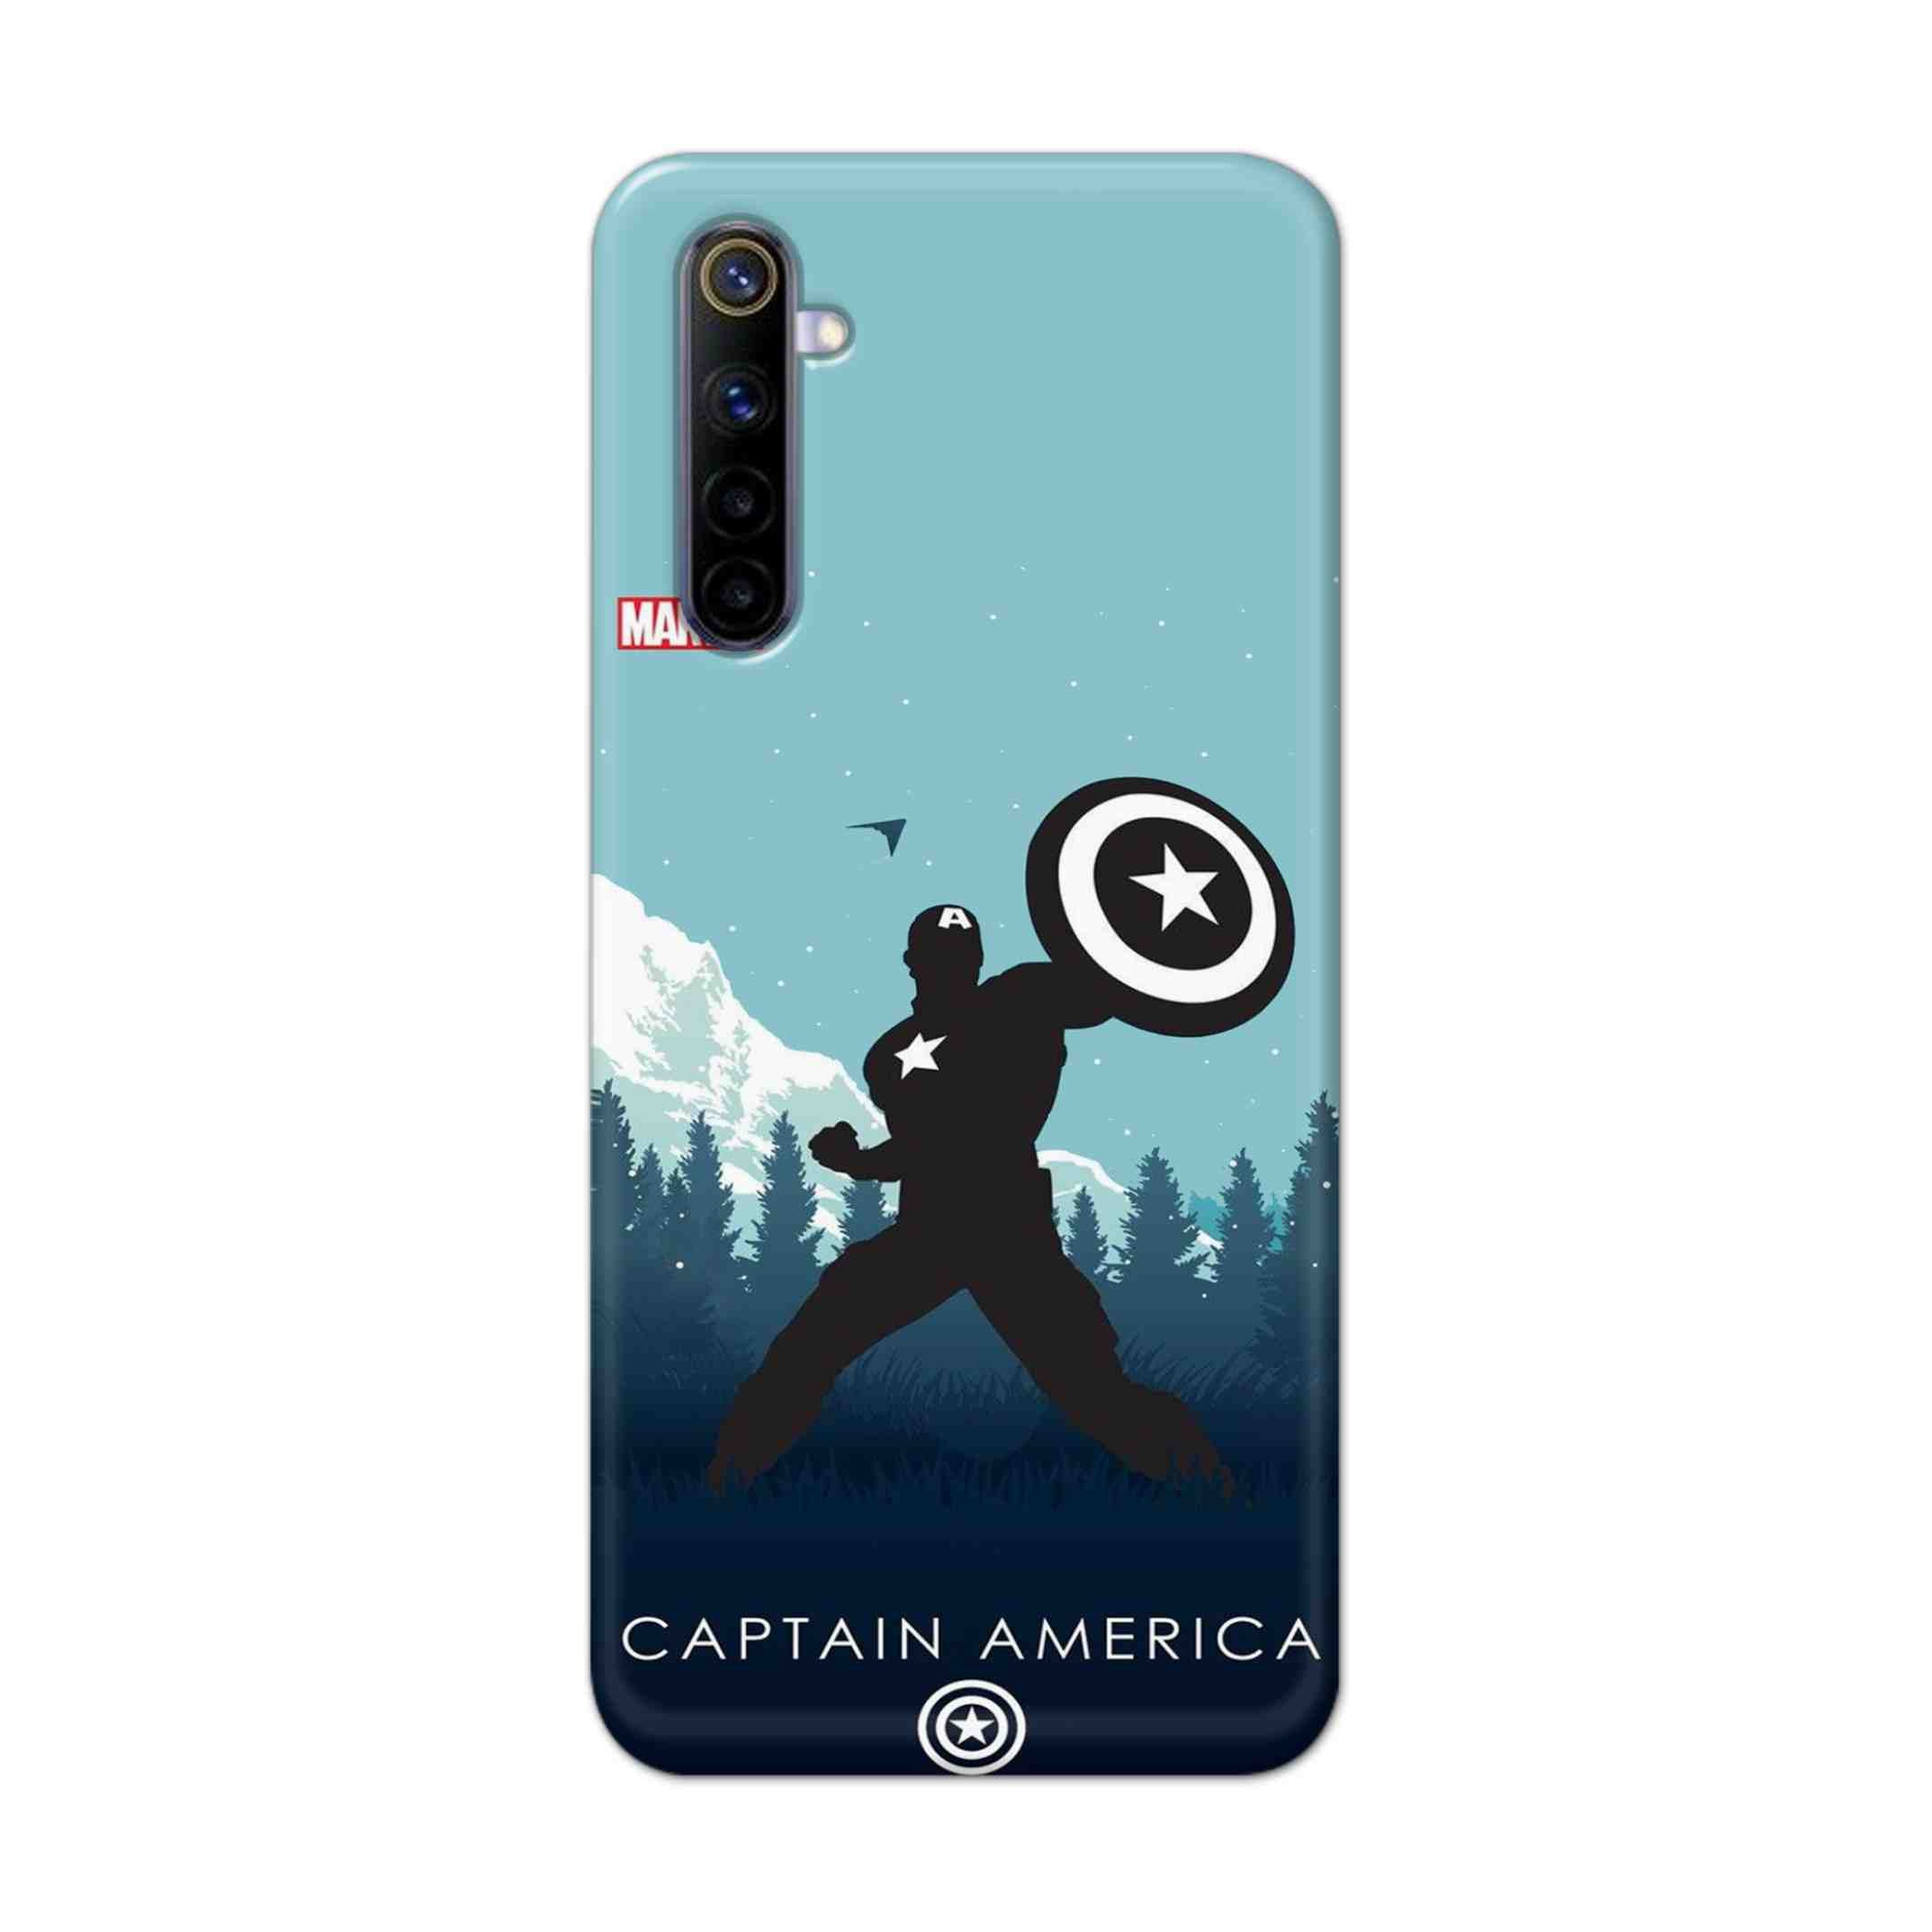 Buy Captain America Hard Back Mobile Phone Case Cover For REALME 6 PRO Online